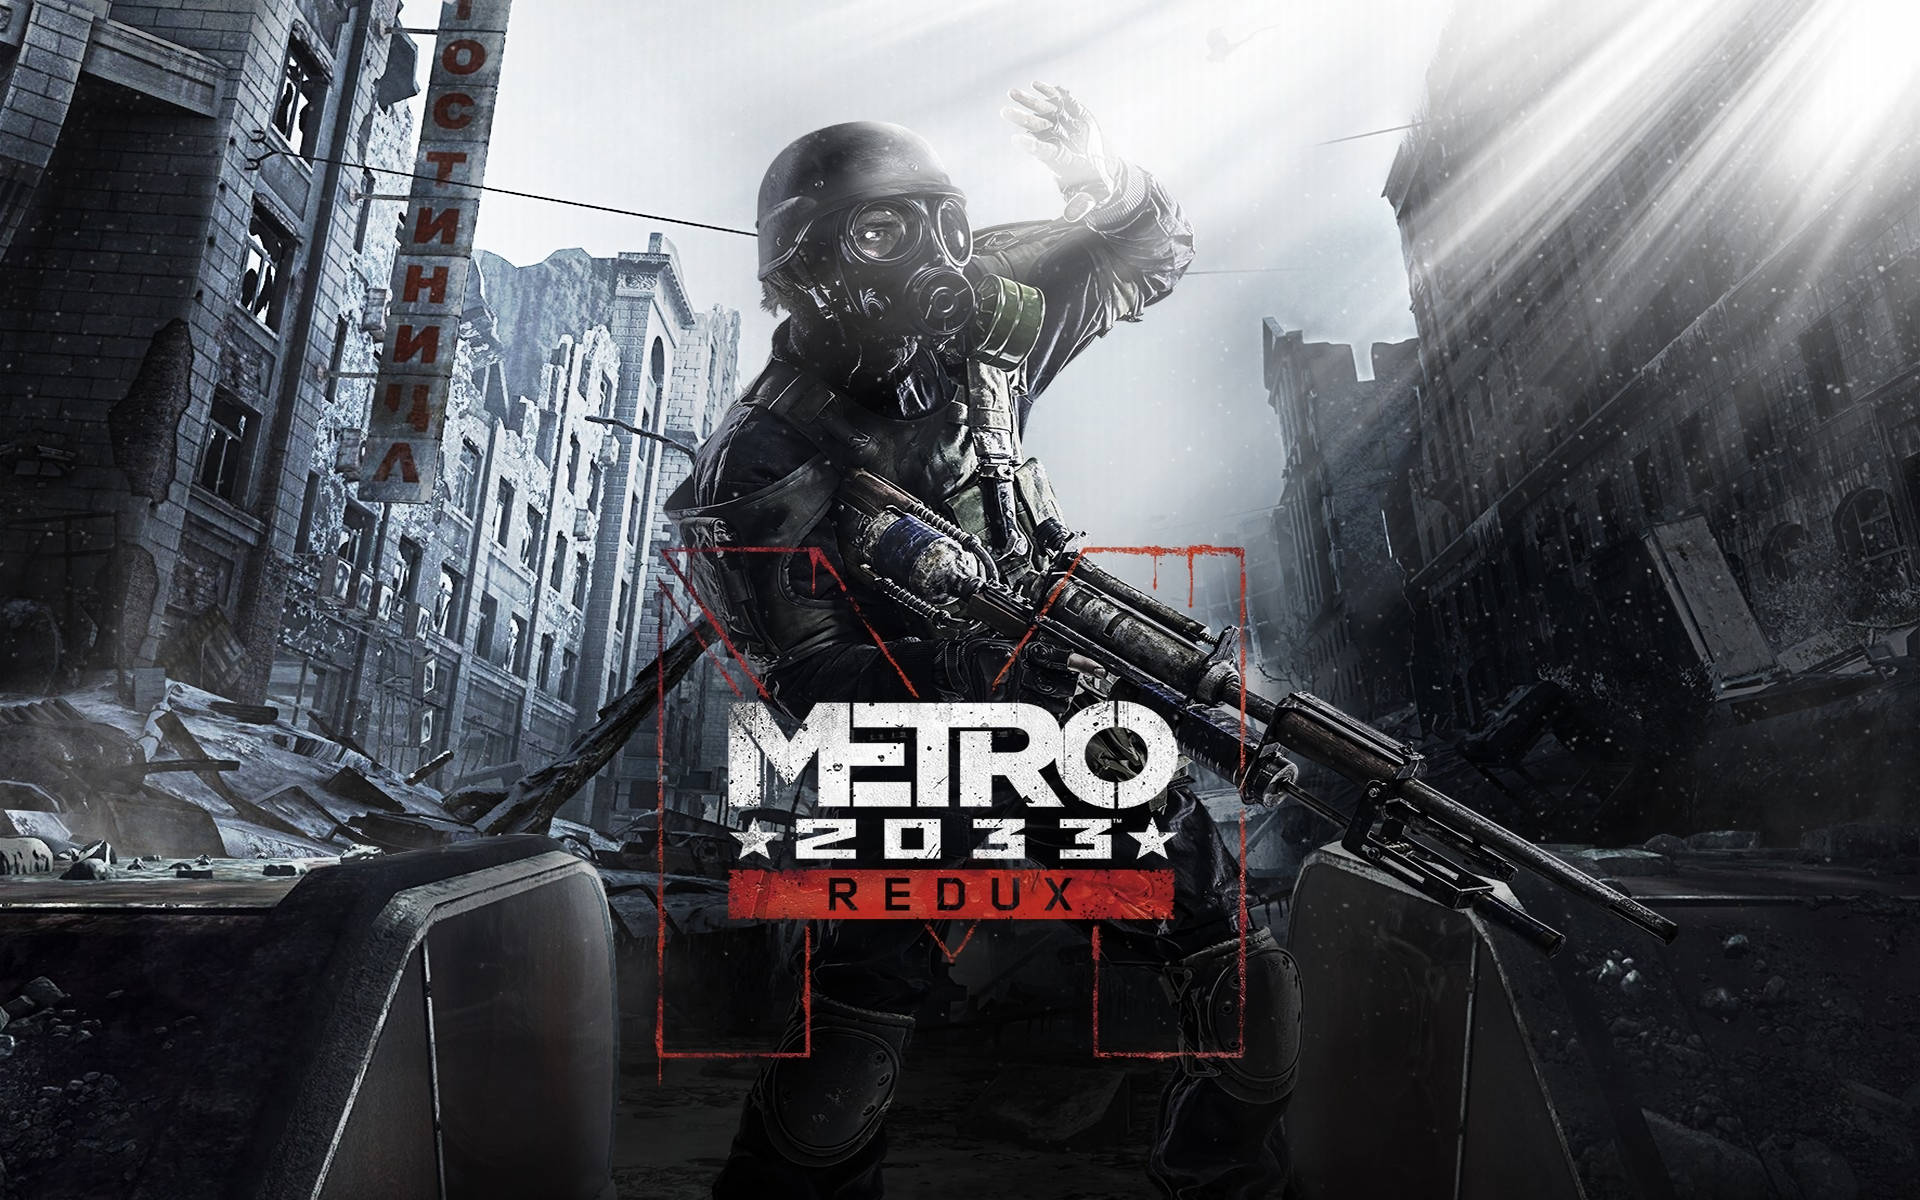 Metro 2033 Redux Cover